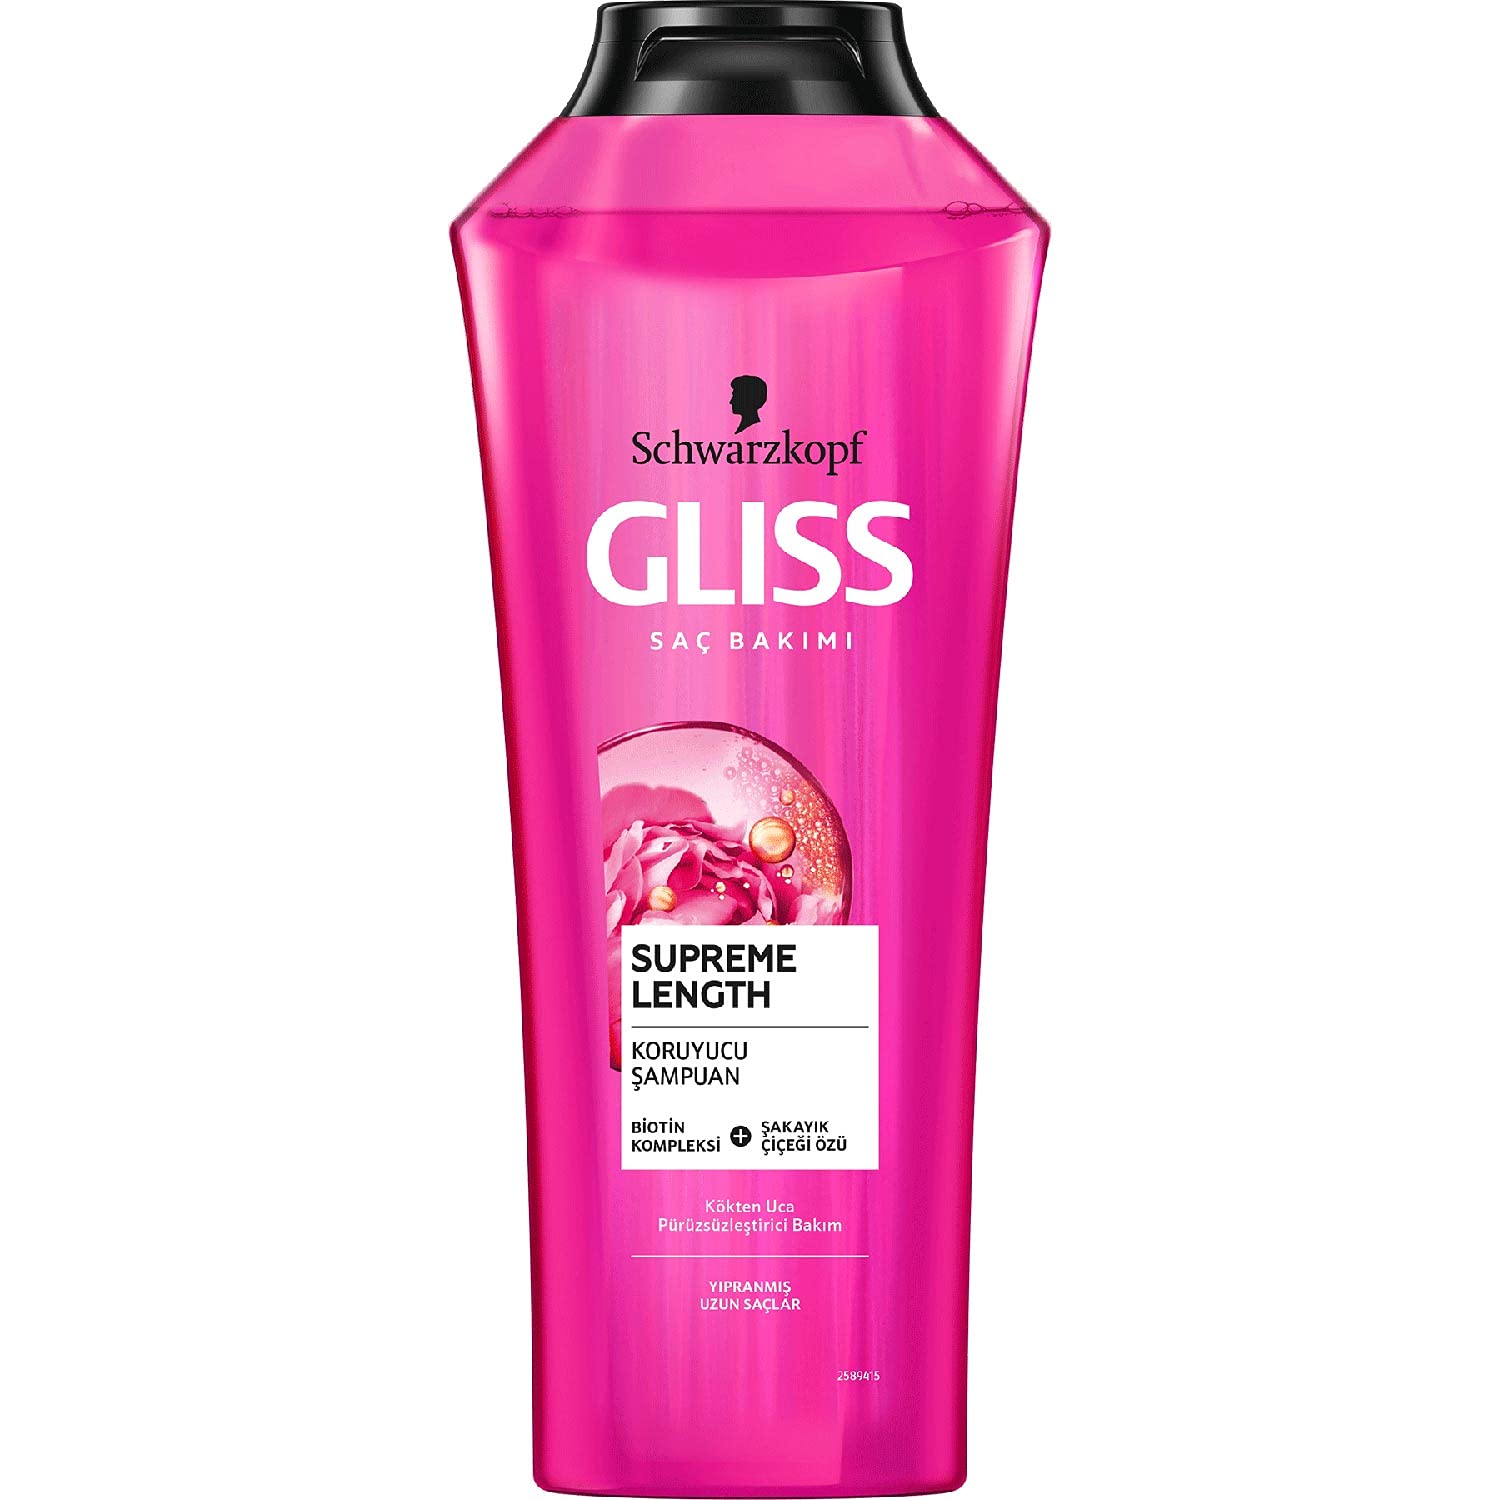 gliss kur supreme length szampon 400 ml